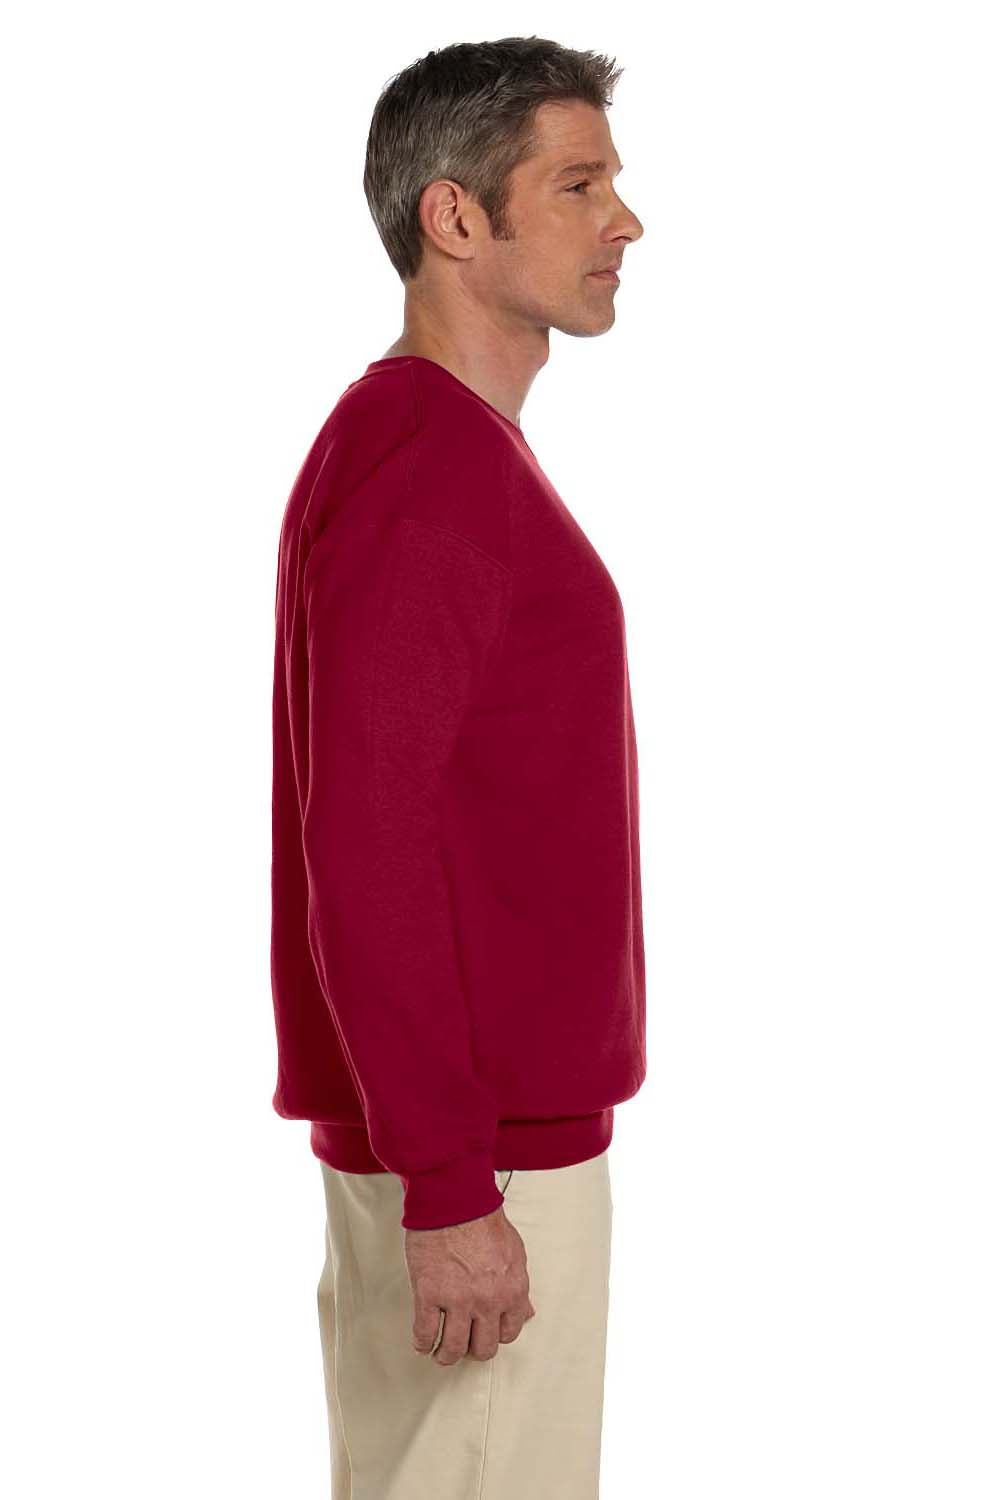 Gildan G180 Mens Fleece Crewneck Sweatshirt Cardinal Red Side